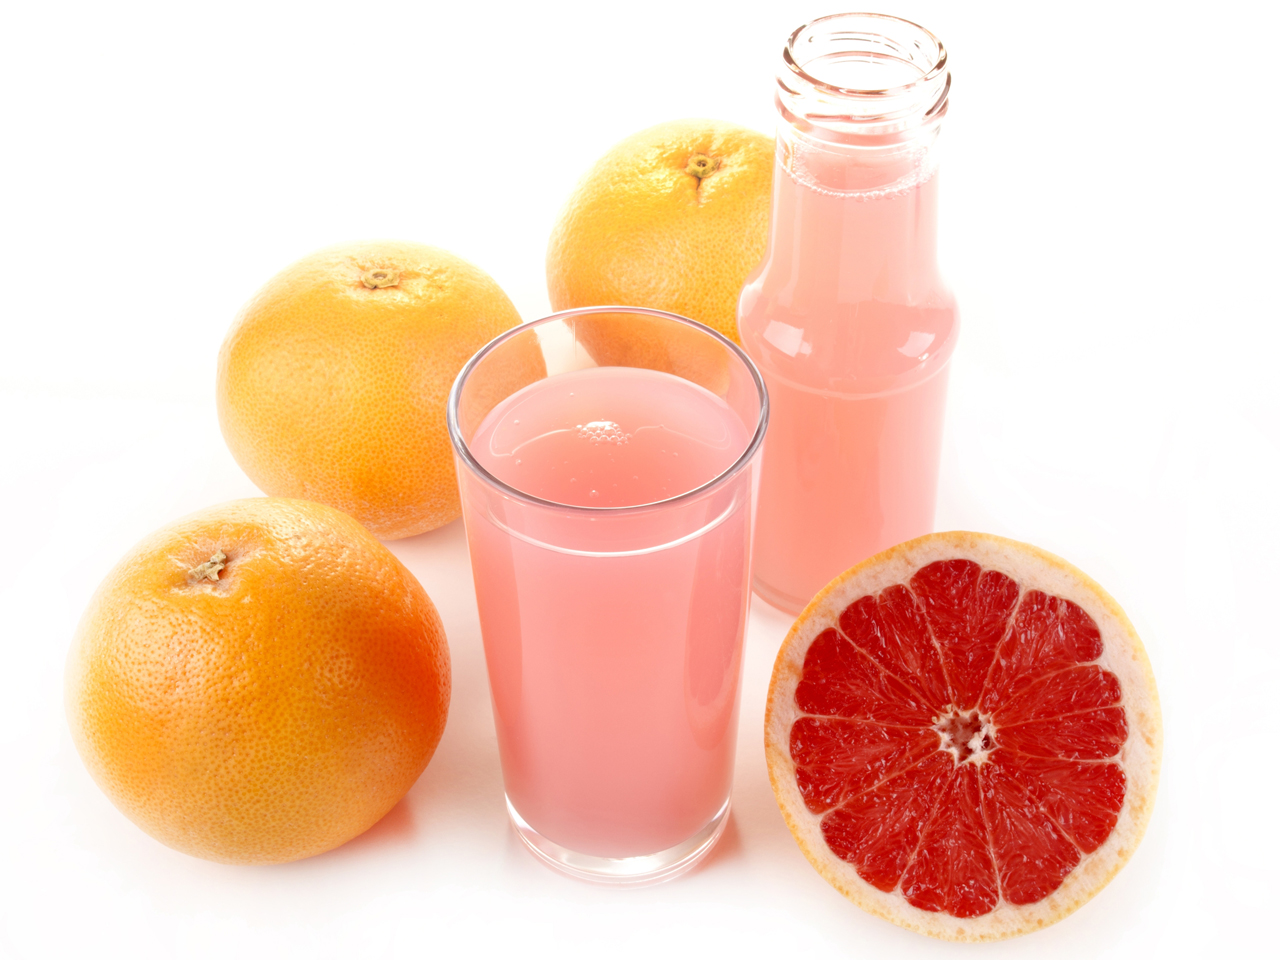 Detoxifiere cu grapefruit. Video CSID - Detoxifiere grapefruit